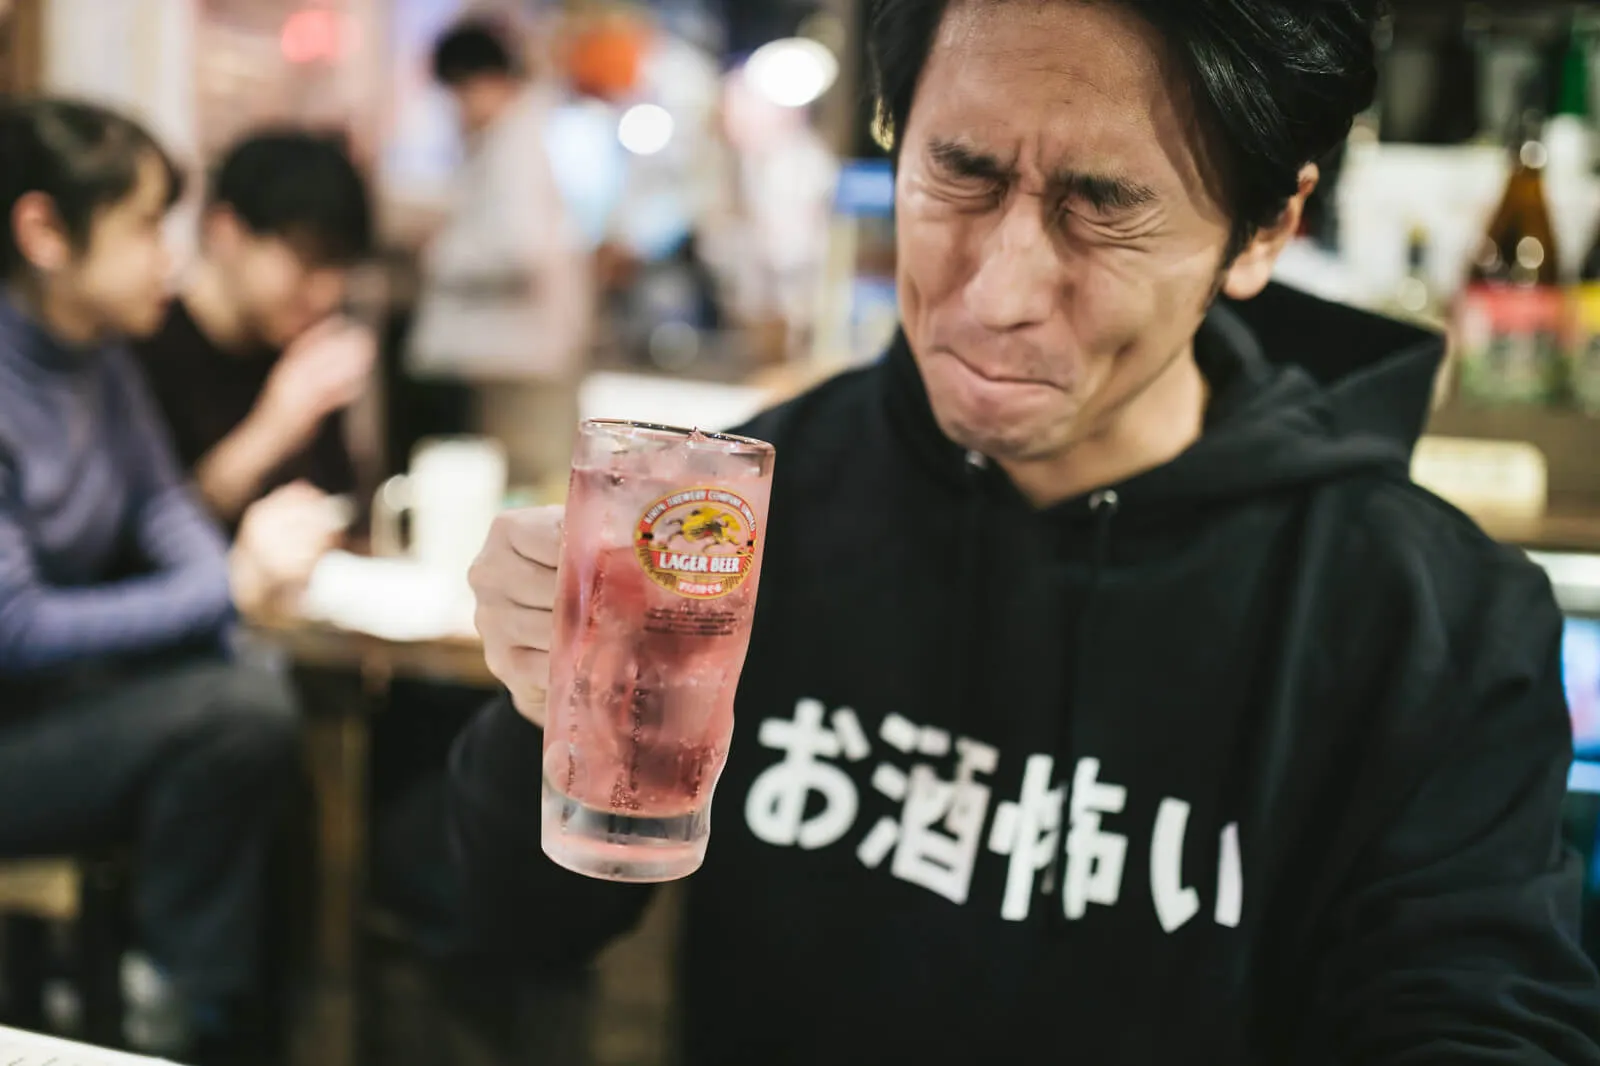 man drink alcohol